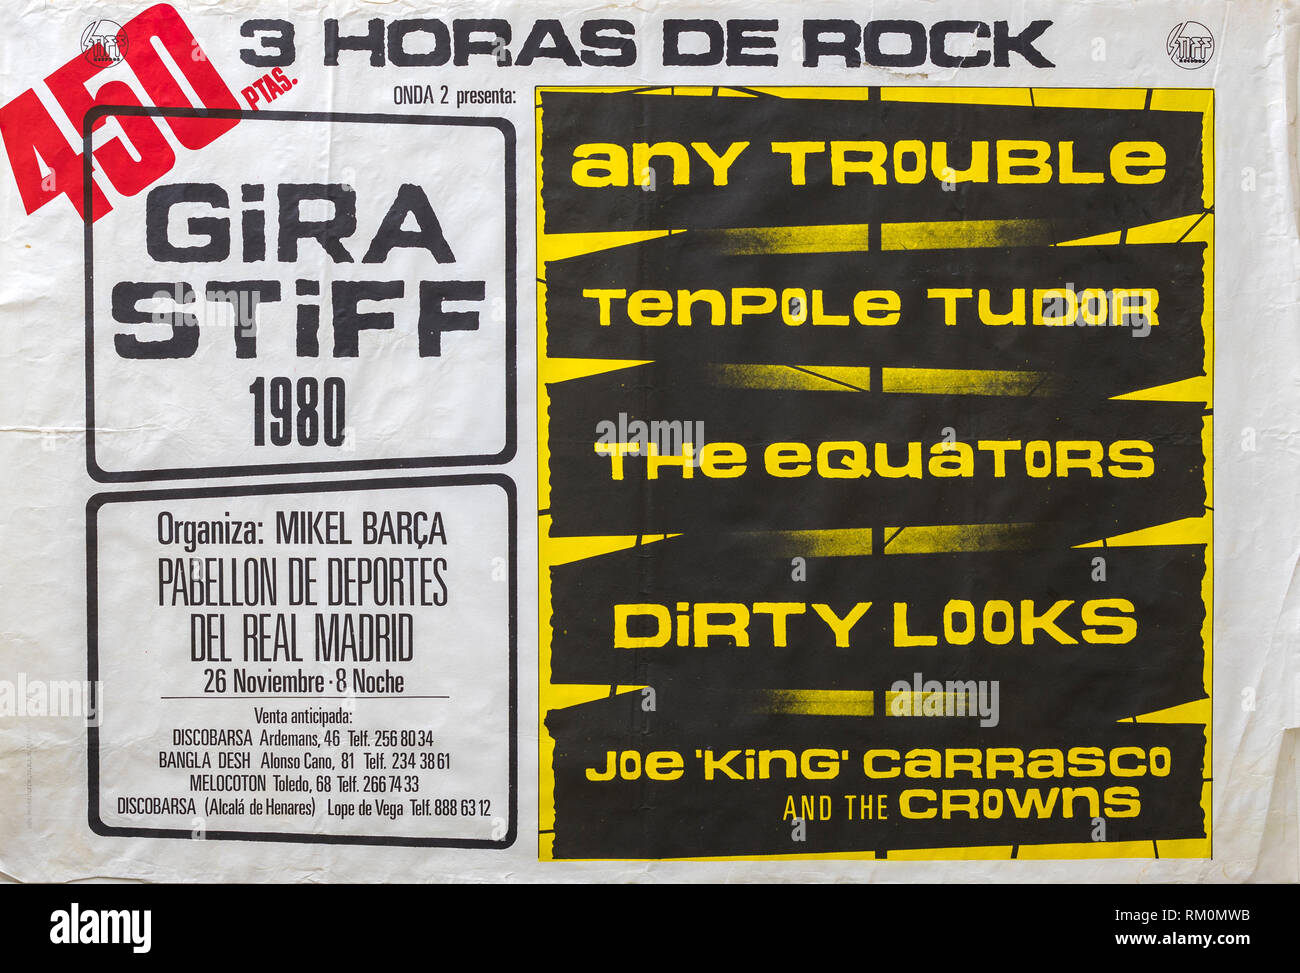 Gira Stiff Madrid 1980, Musical concert poster Stock Photo